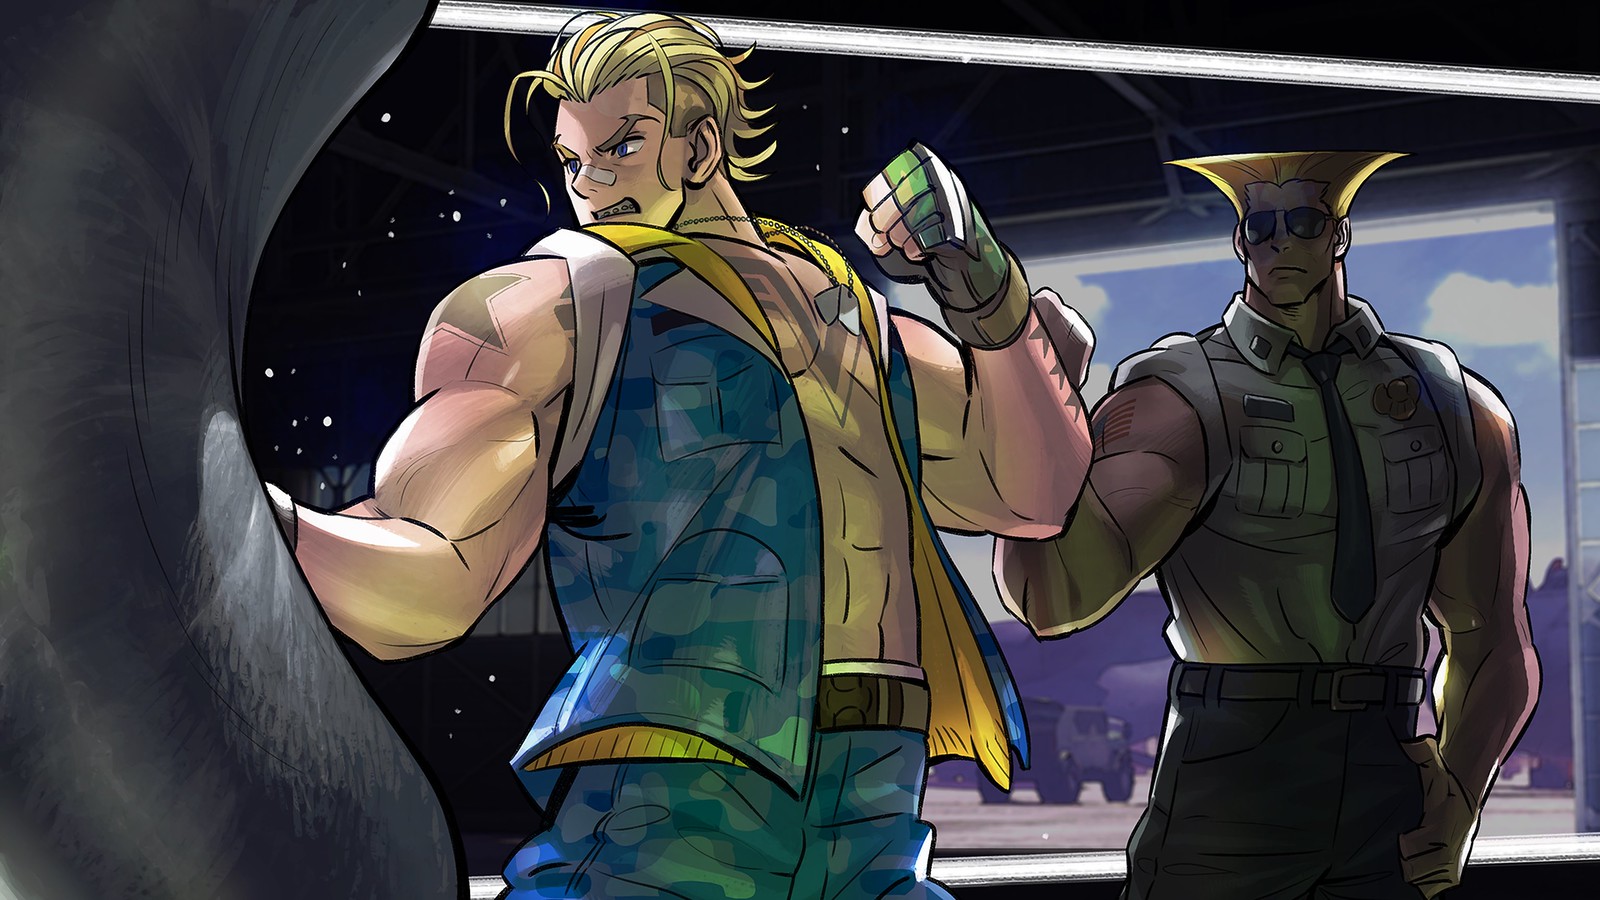 Meet the future of Street Fighter, SFV’s final character: Luke